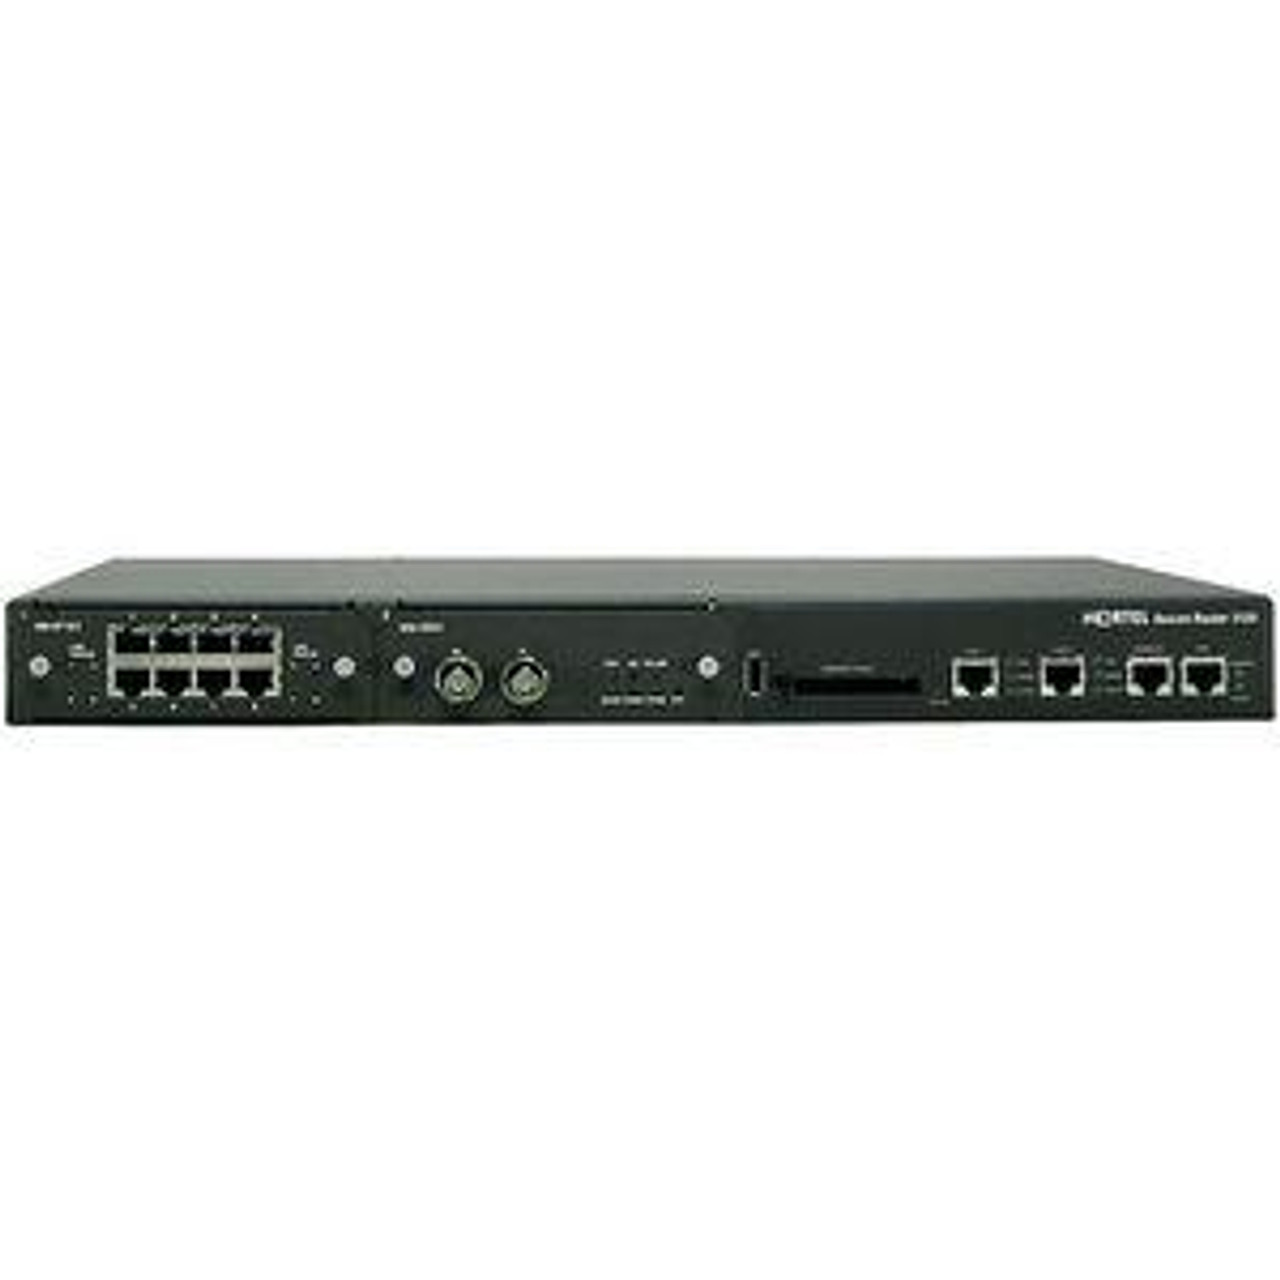 SR2102004E5 Nortel 3120 Secure Router 1 x CompactFlash (CF) Card 2 x 10/100Base-TX LAN, 1 x USB (Refurbished)